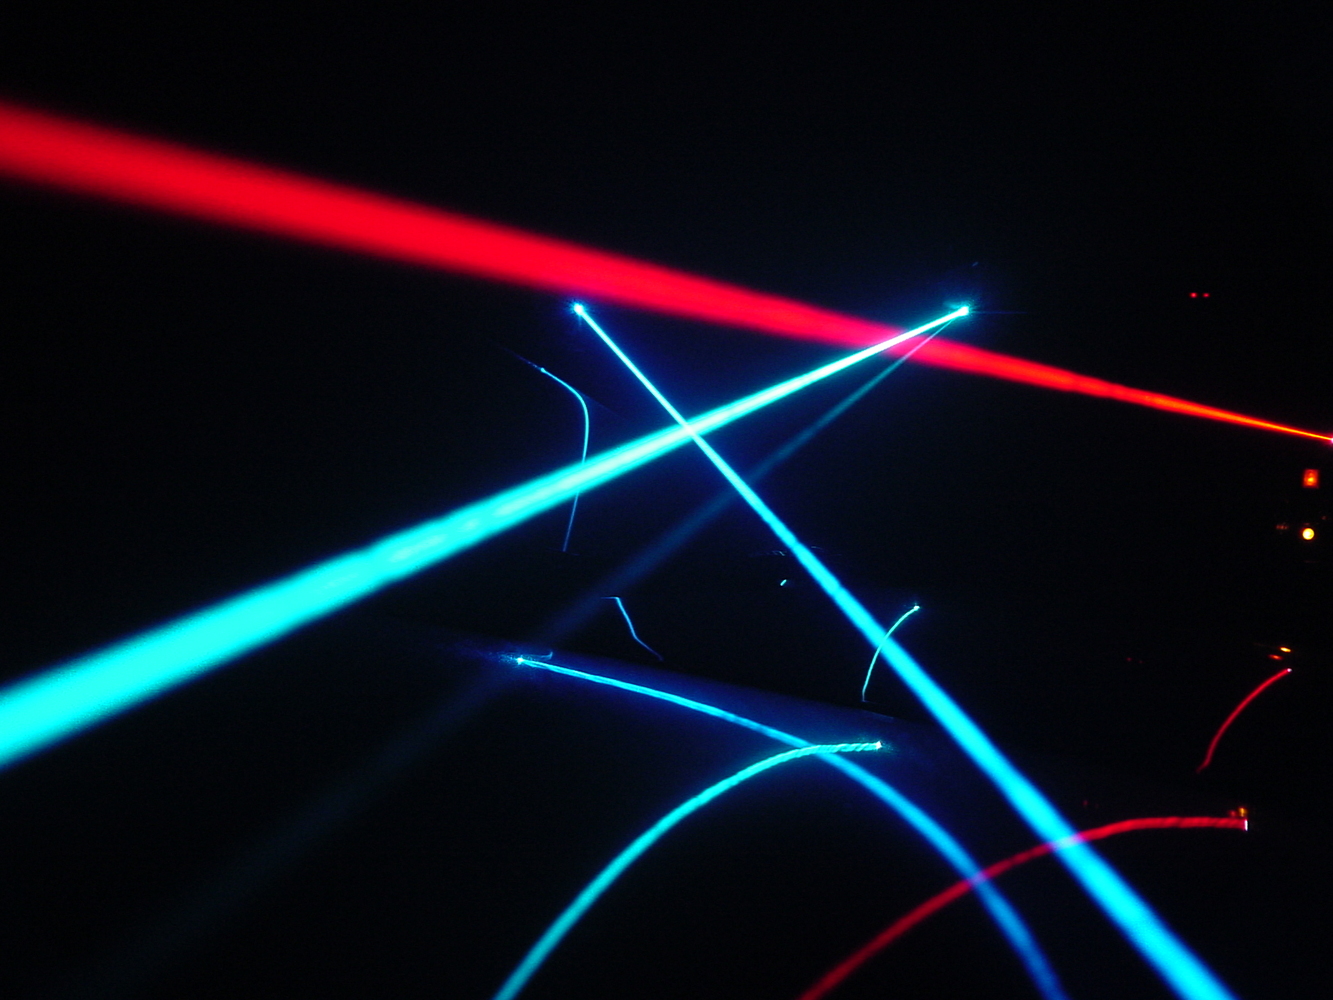 Argon-ion and He-Ne laser beams